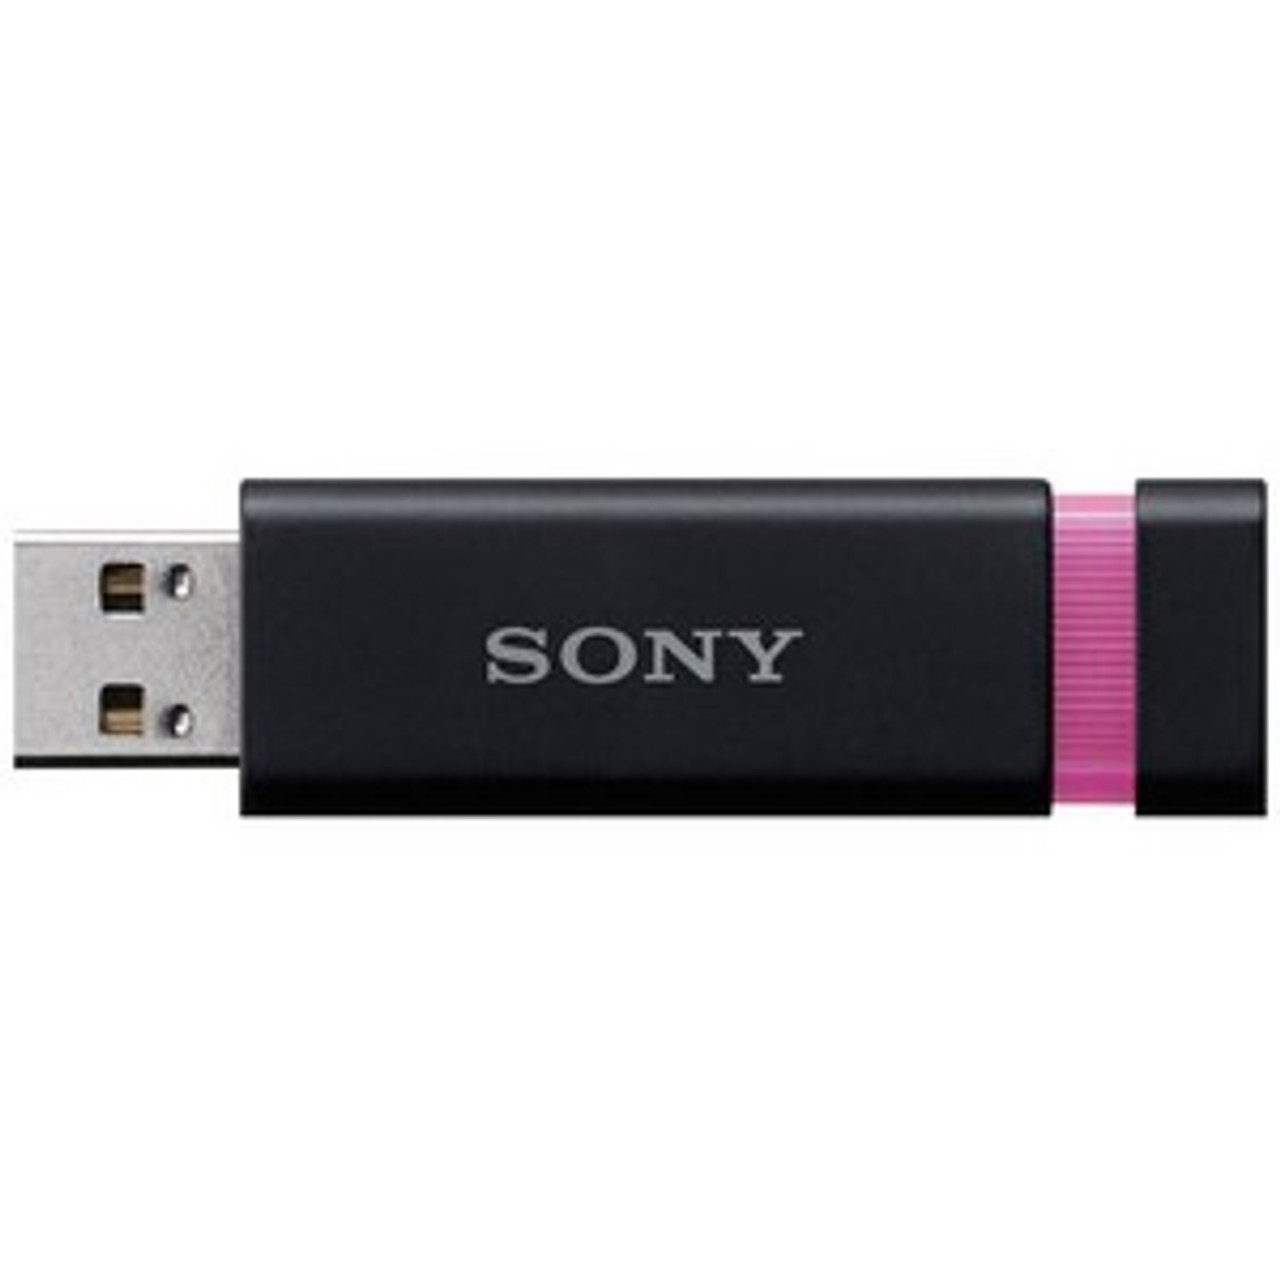 USM16GL/E - Sony Micro Vault Click USM16GL 16 GB USB 2.0 Flash Drive - External